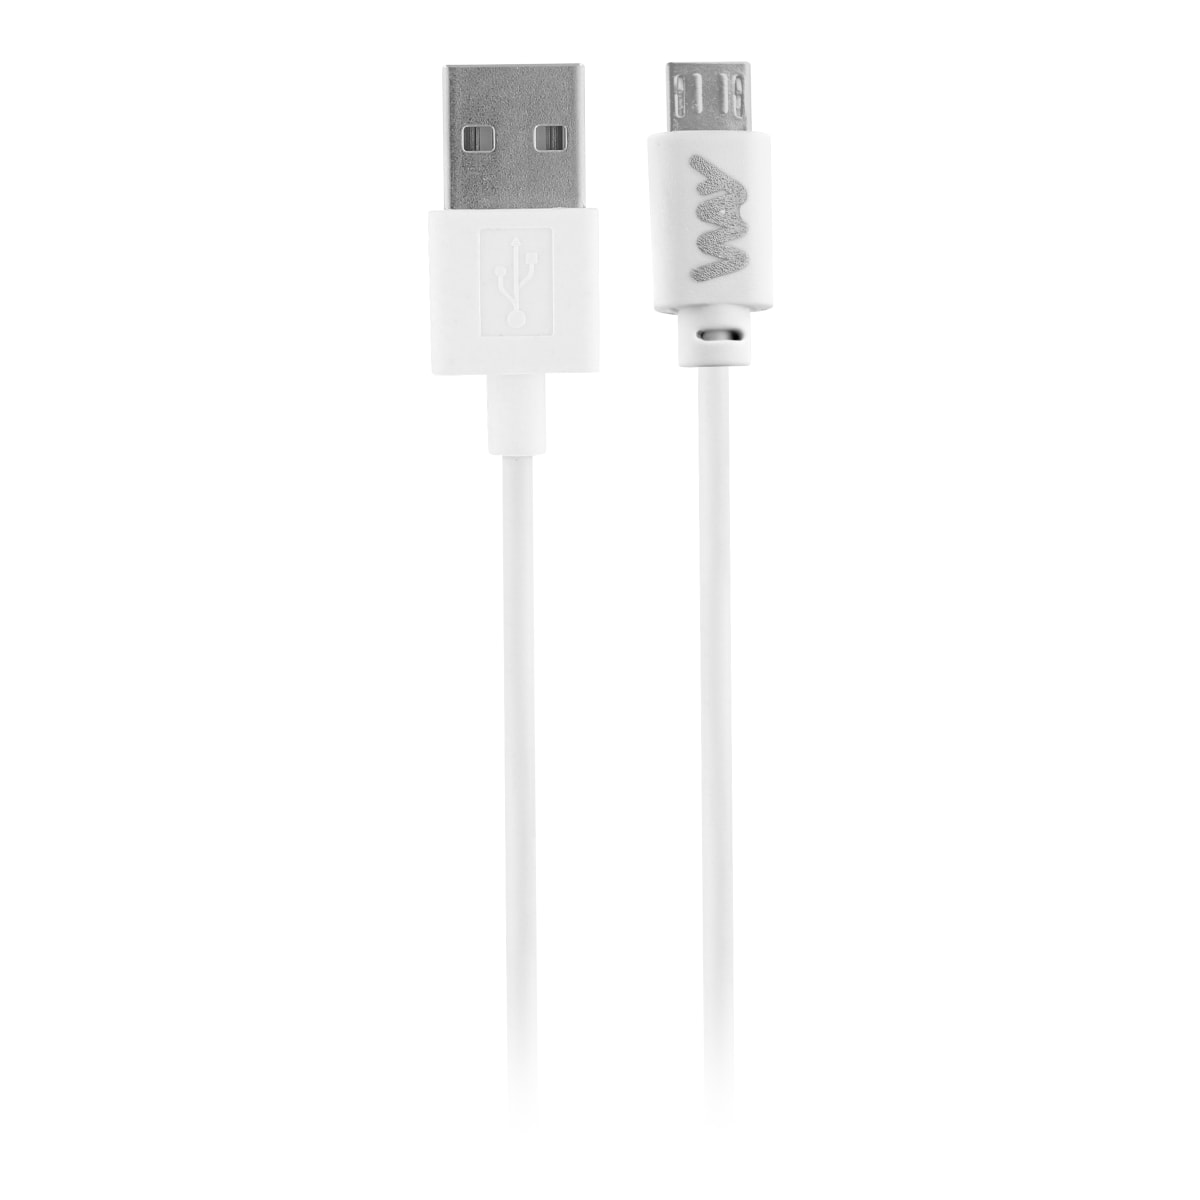 USB / Micro USB cable